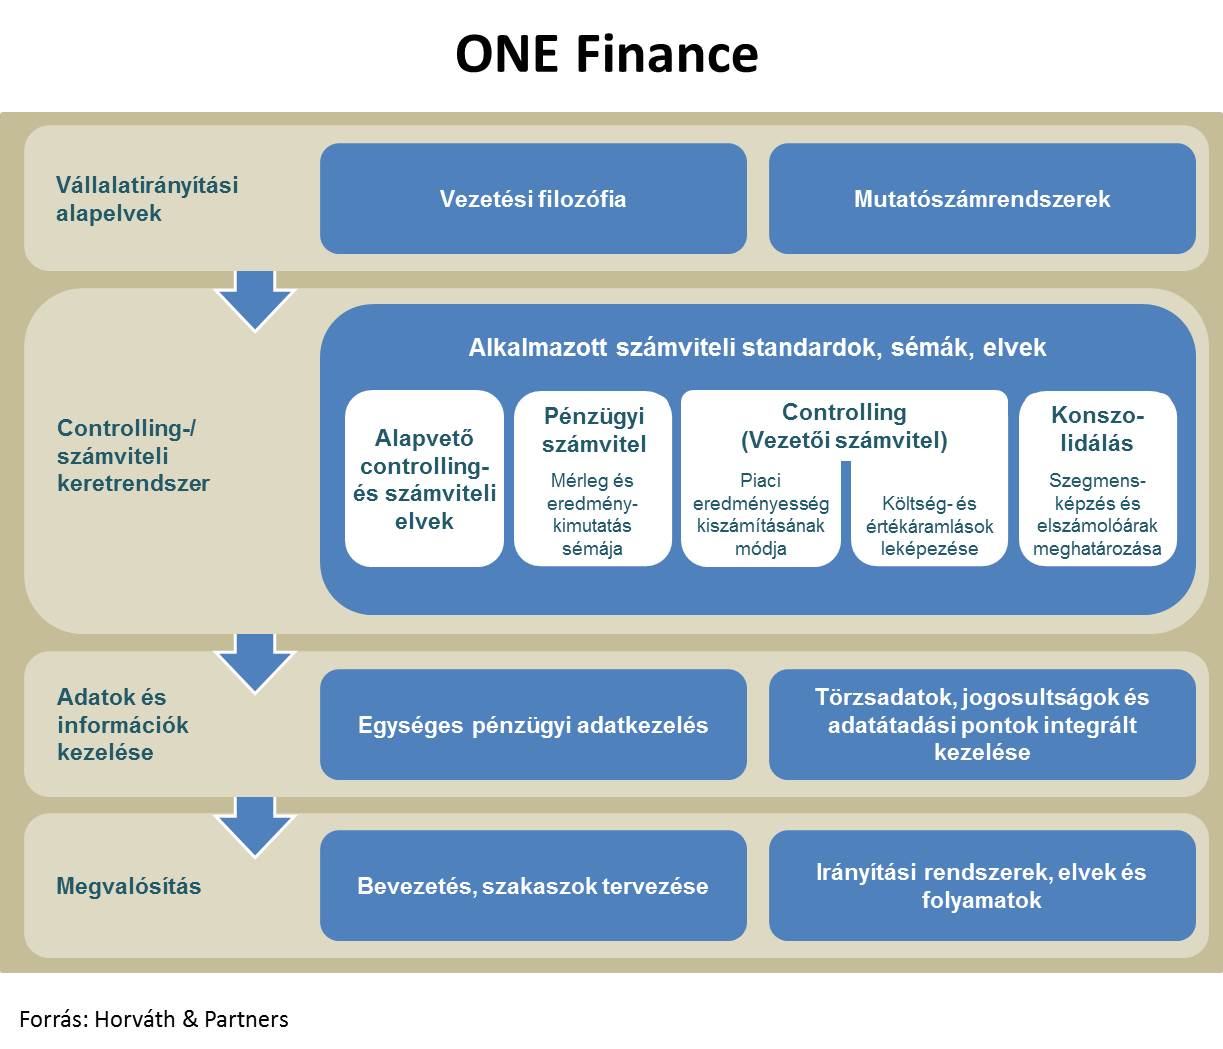 One Finance